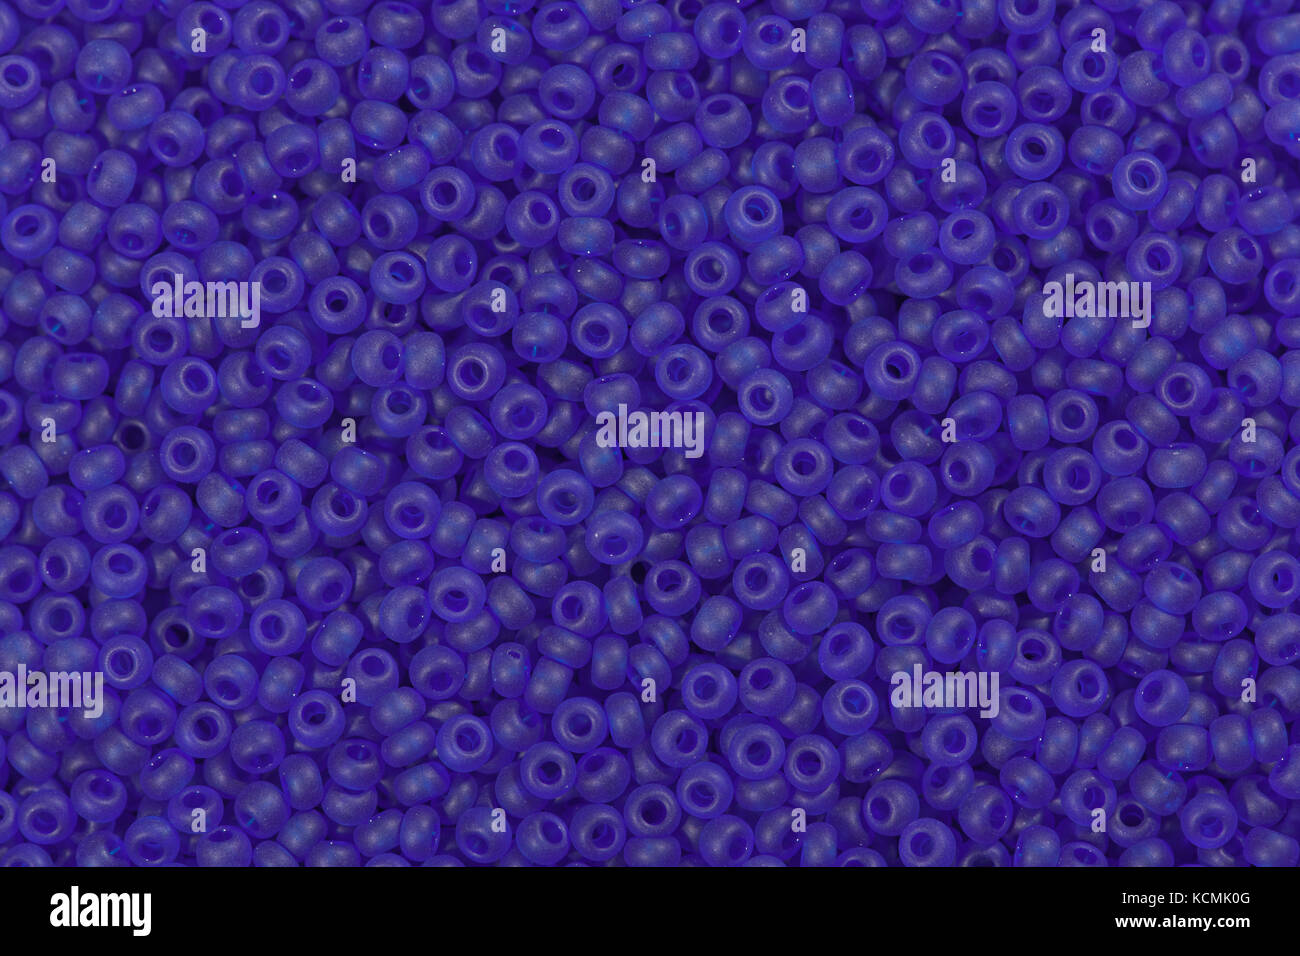 Background of beautiful purple seed beads. Stock Photo